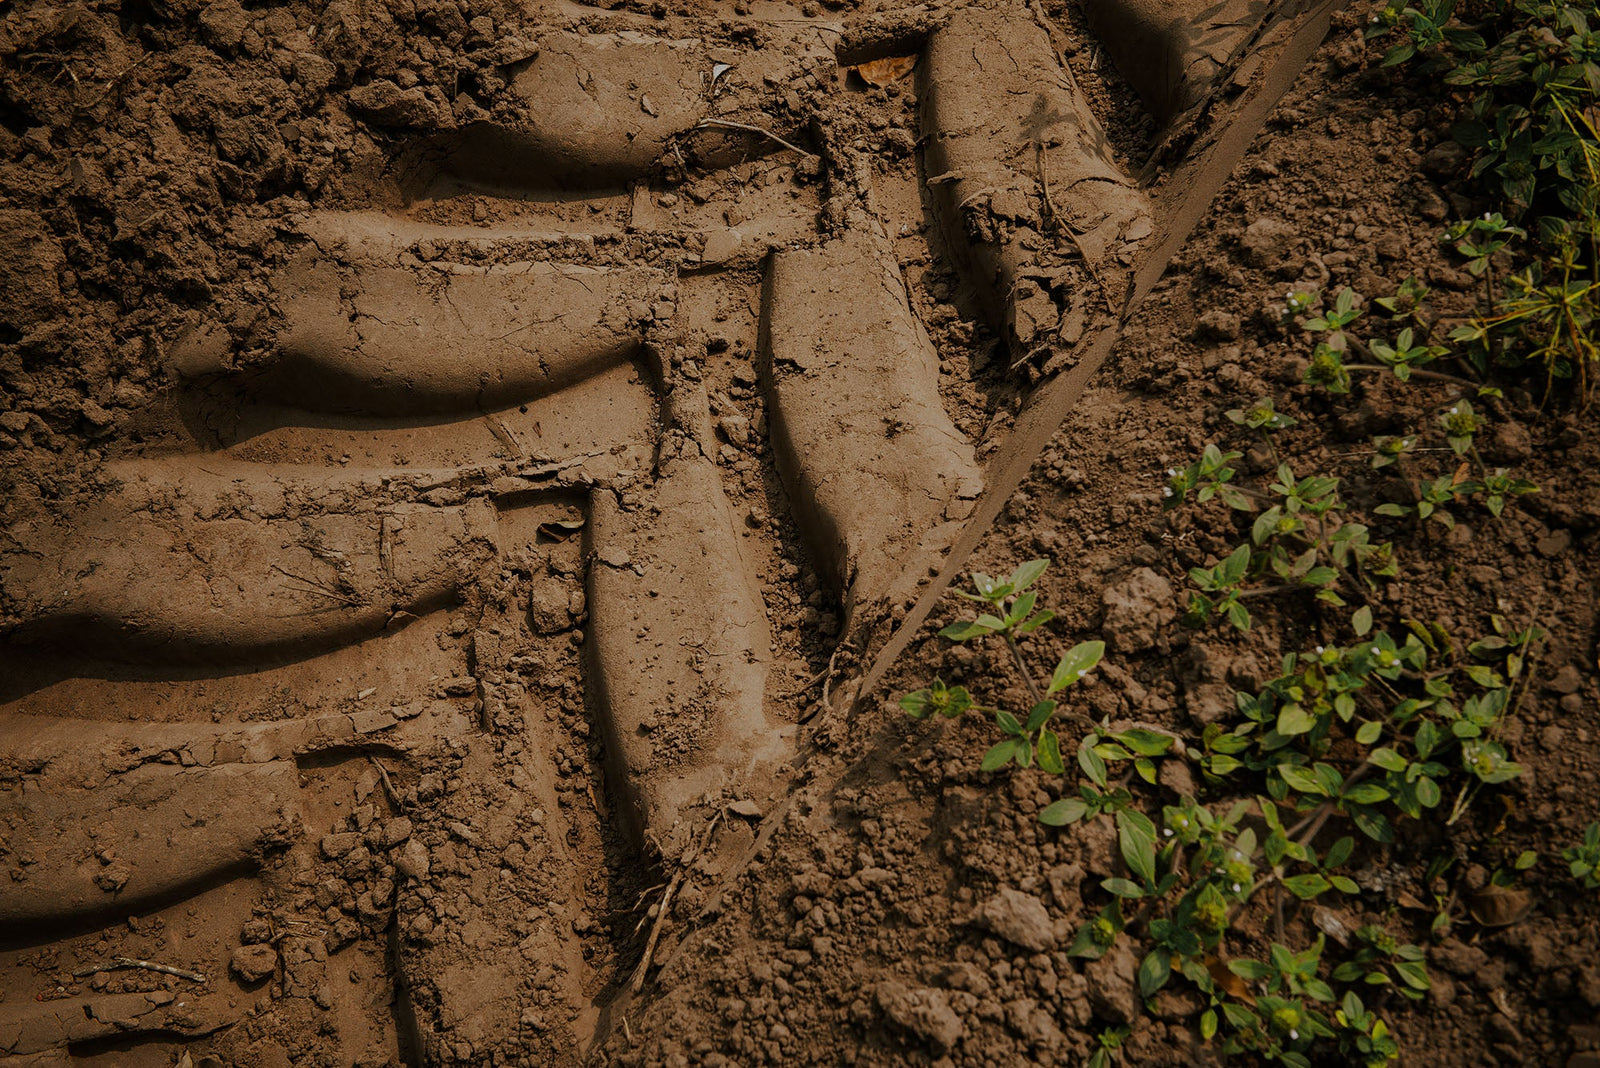 Tire track in mud